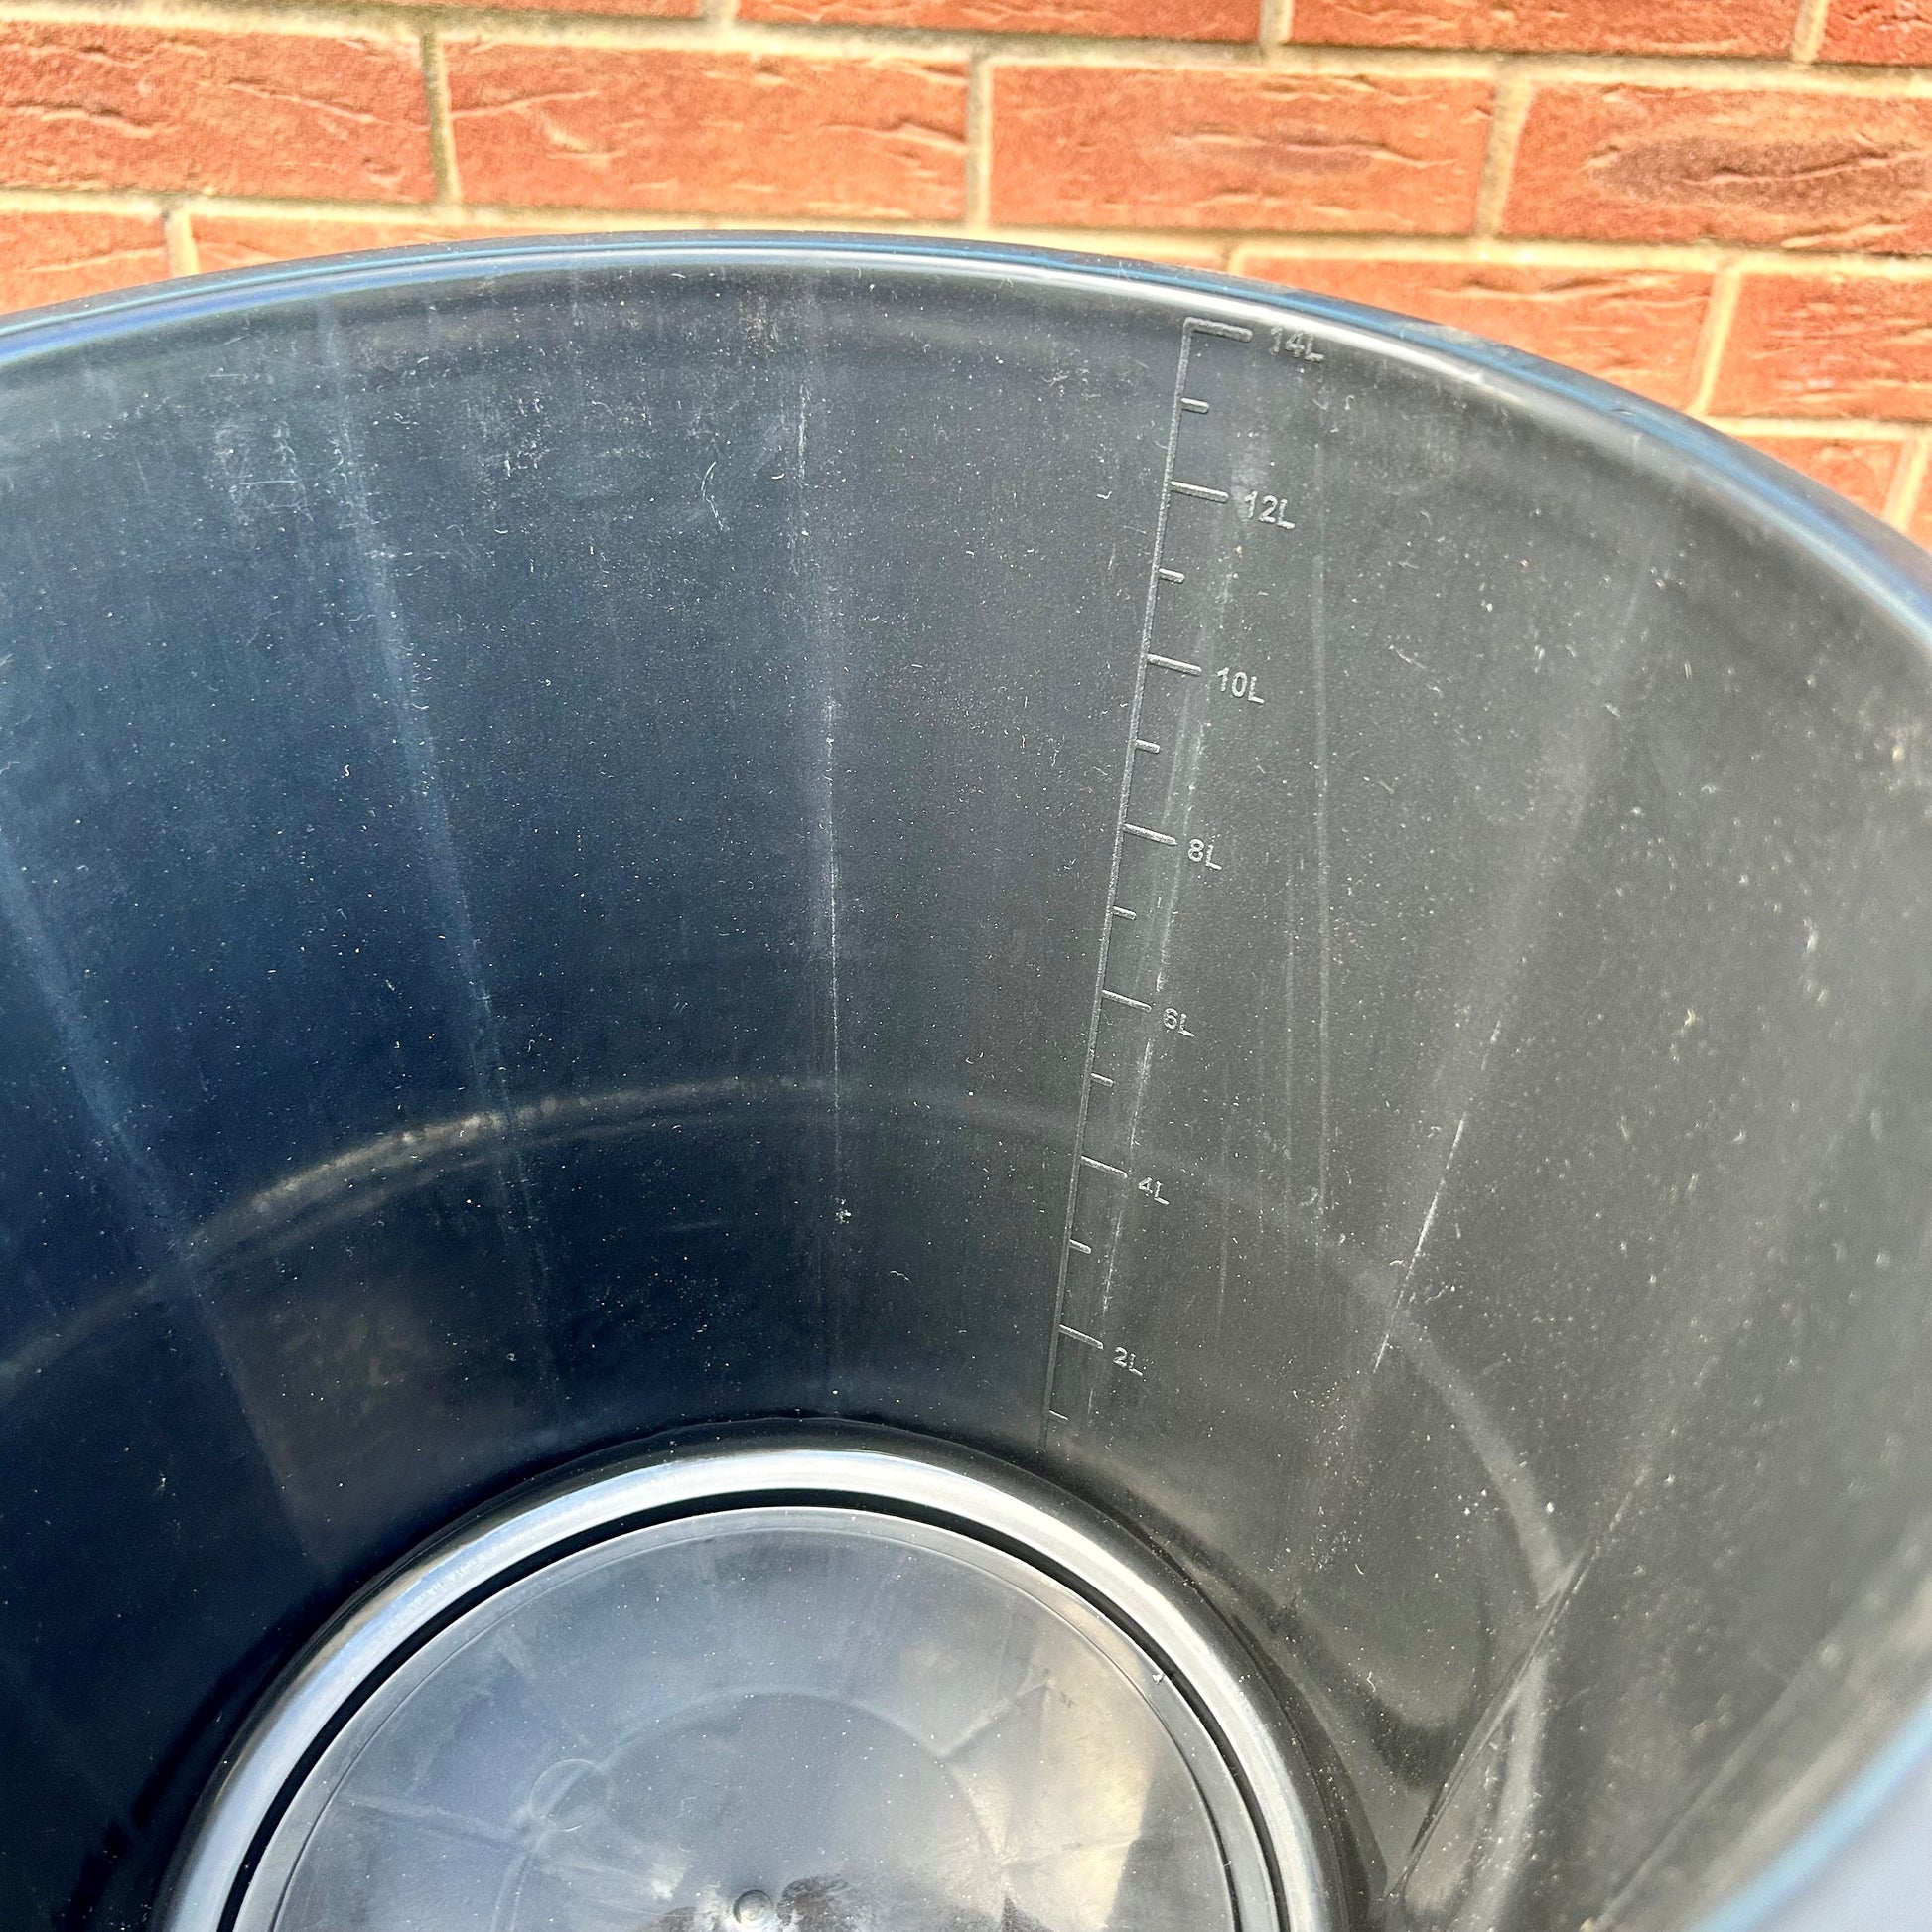 measurements on the black bucket